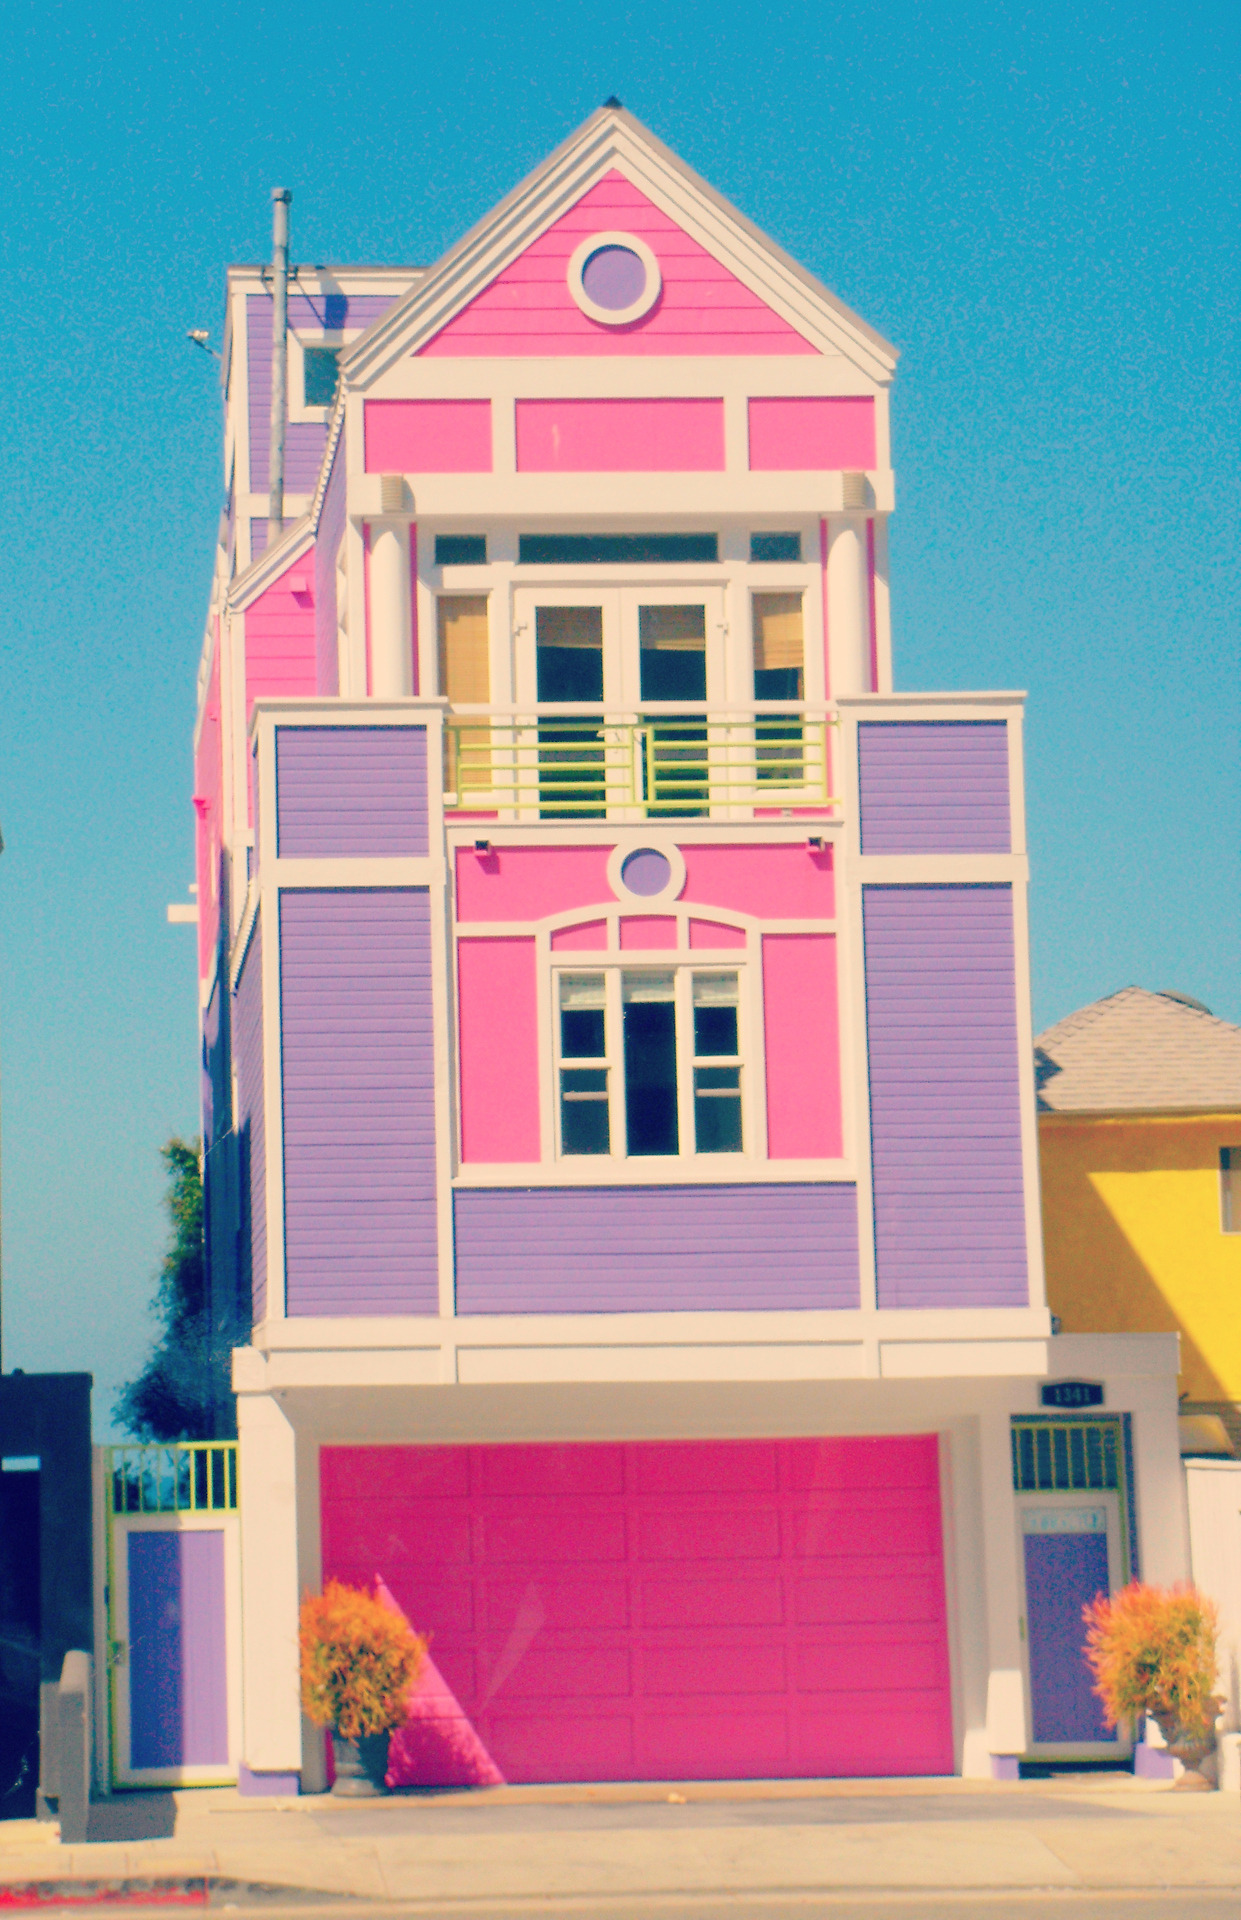 
House of Ruth Handler creator of Barbie in Santa Monica, L.A. California
